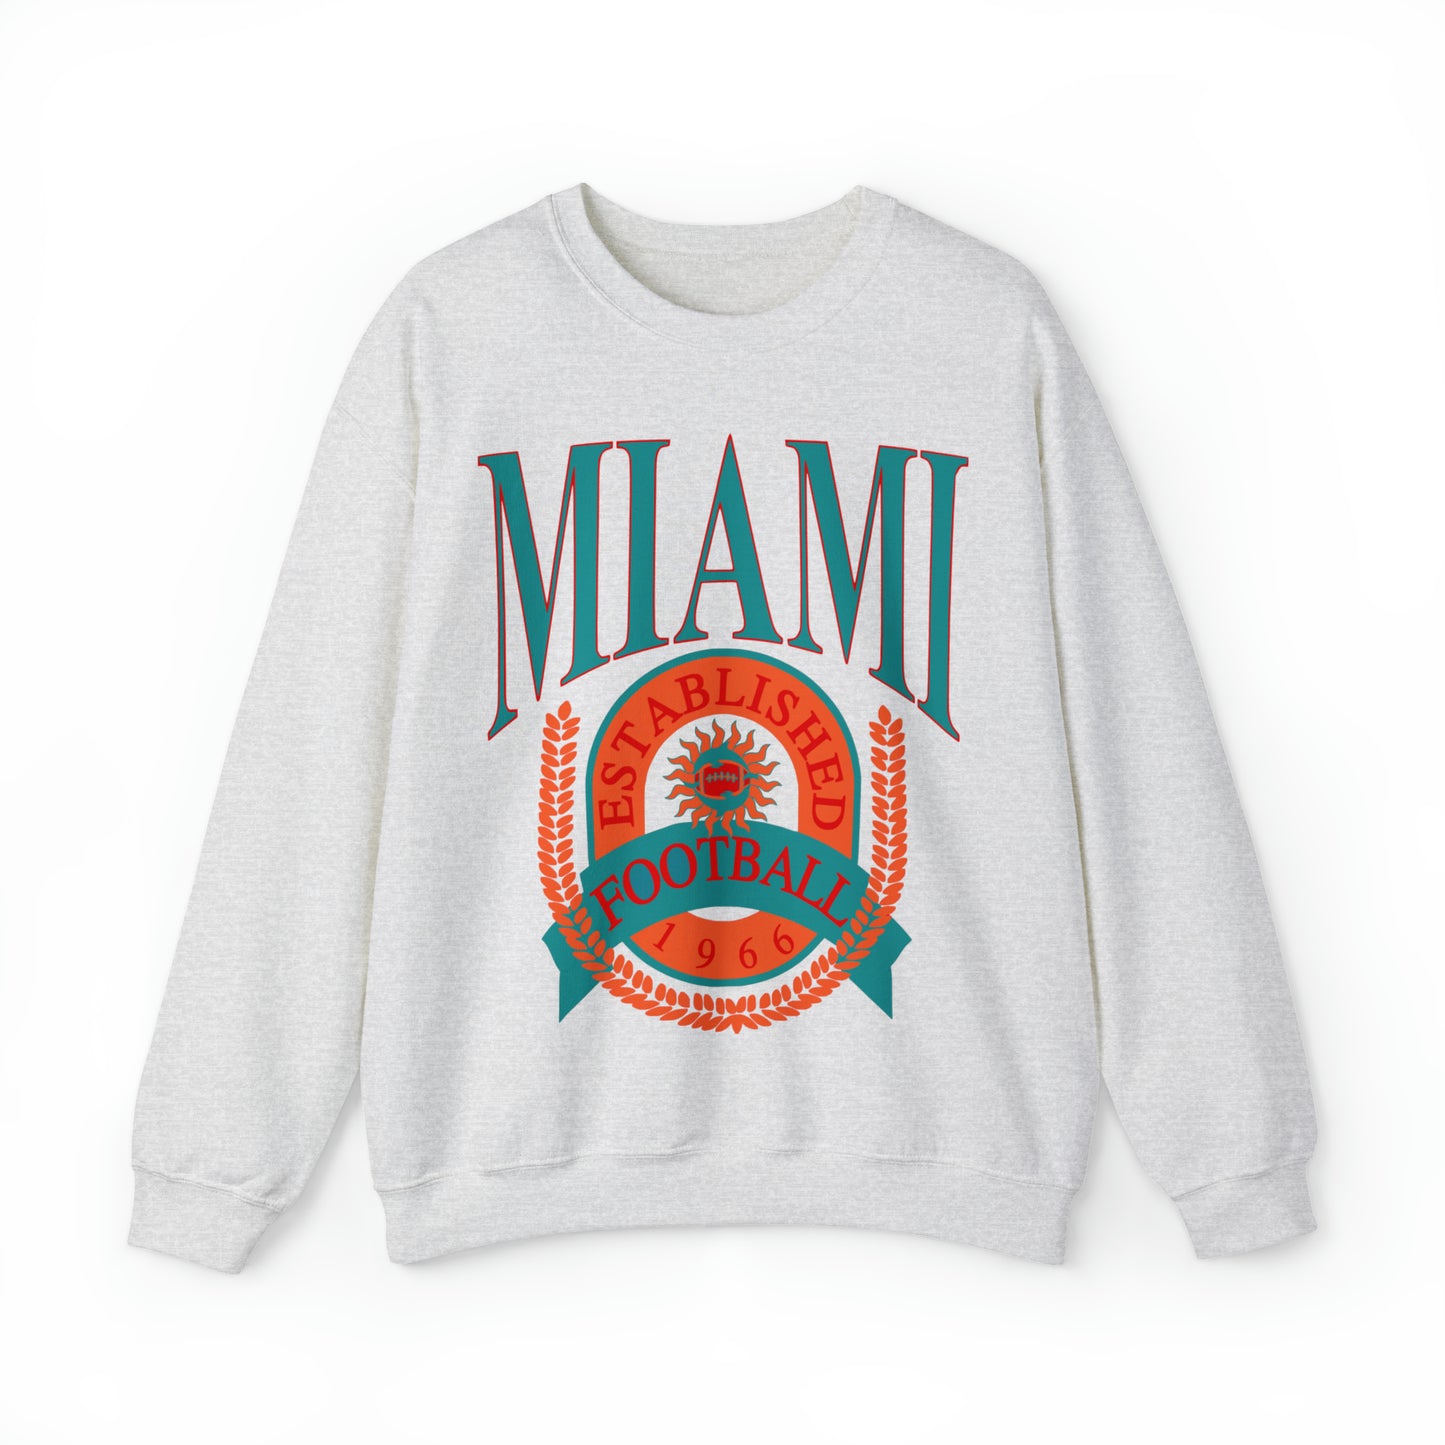 Throwback Miami Dolphins Football Sweatshirt - Vintage Style Football Crewneck - Men's & Women's Football Apparel - Design 1